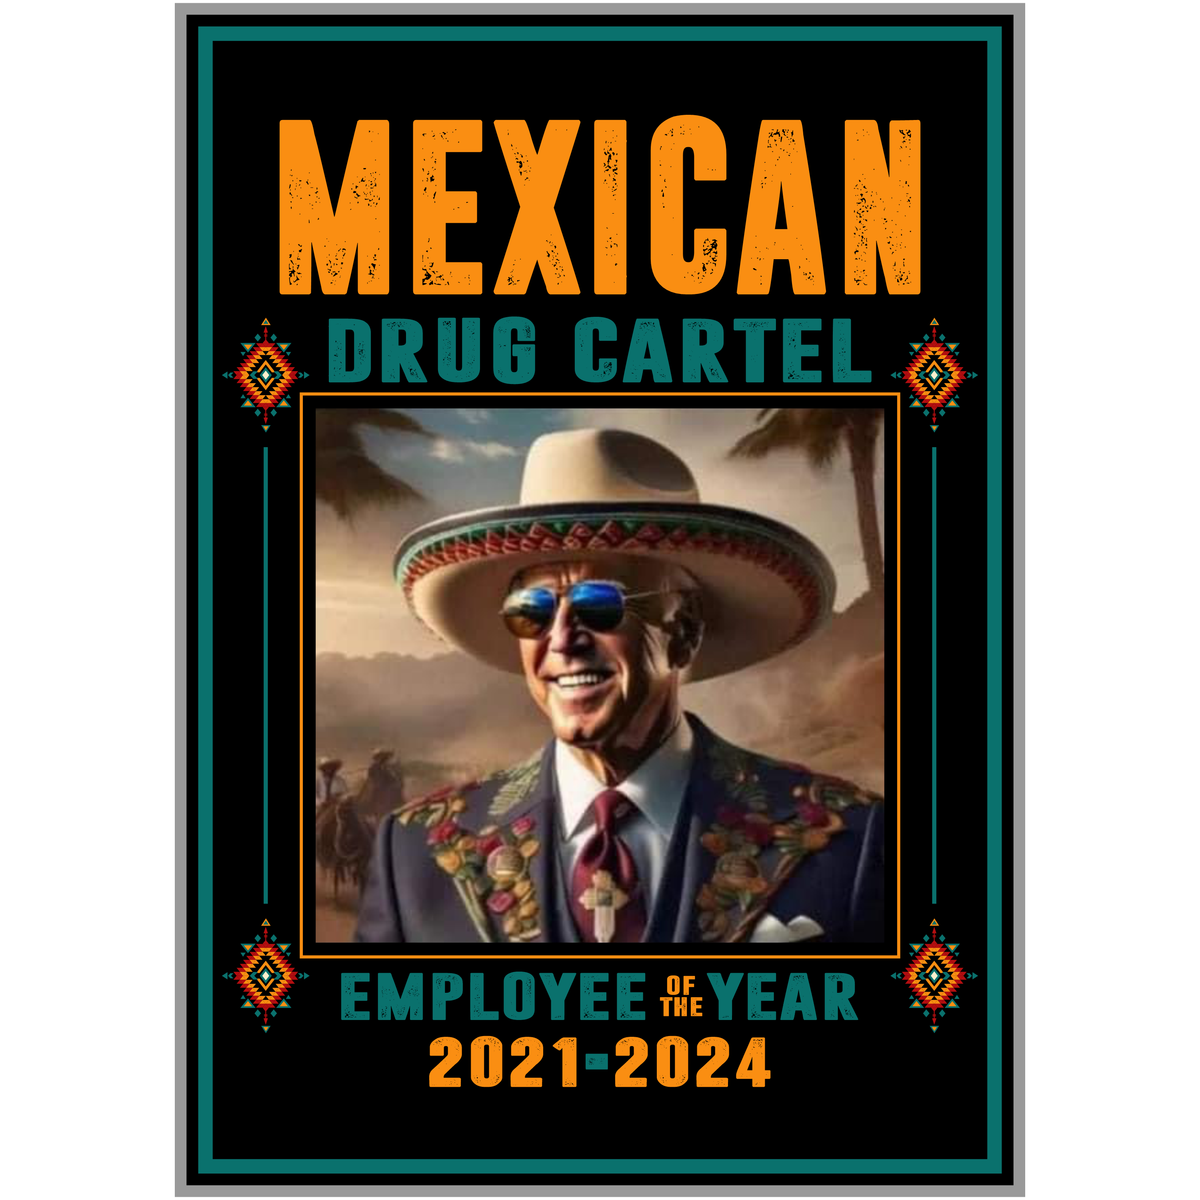 Mexican Drug Cartel Employee of the Year - Biden - PermaSticker - Free Shipping - Installation Video in Description